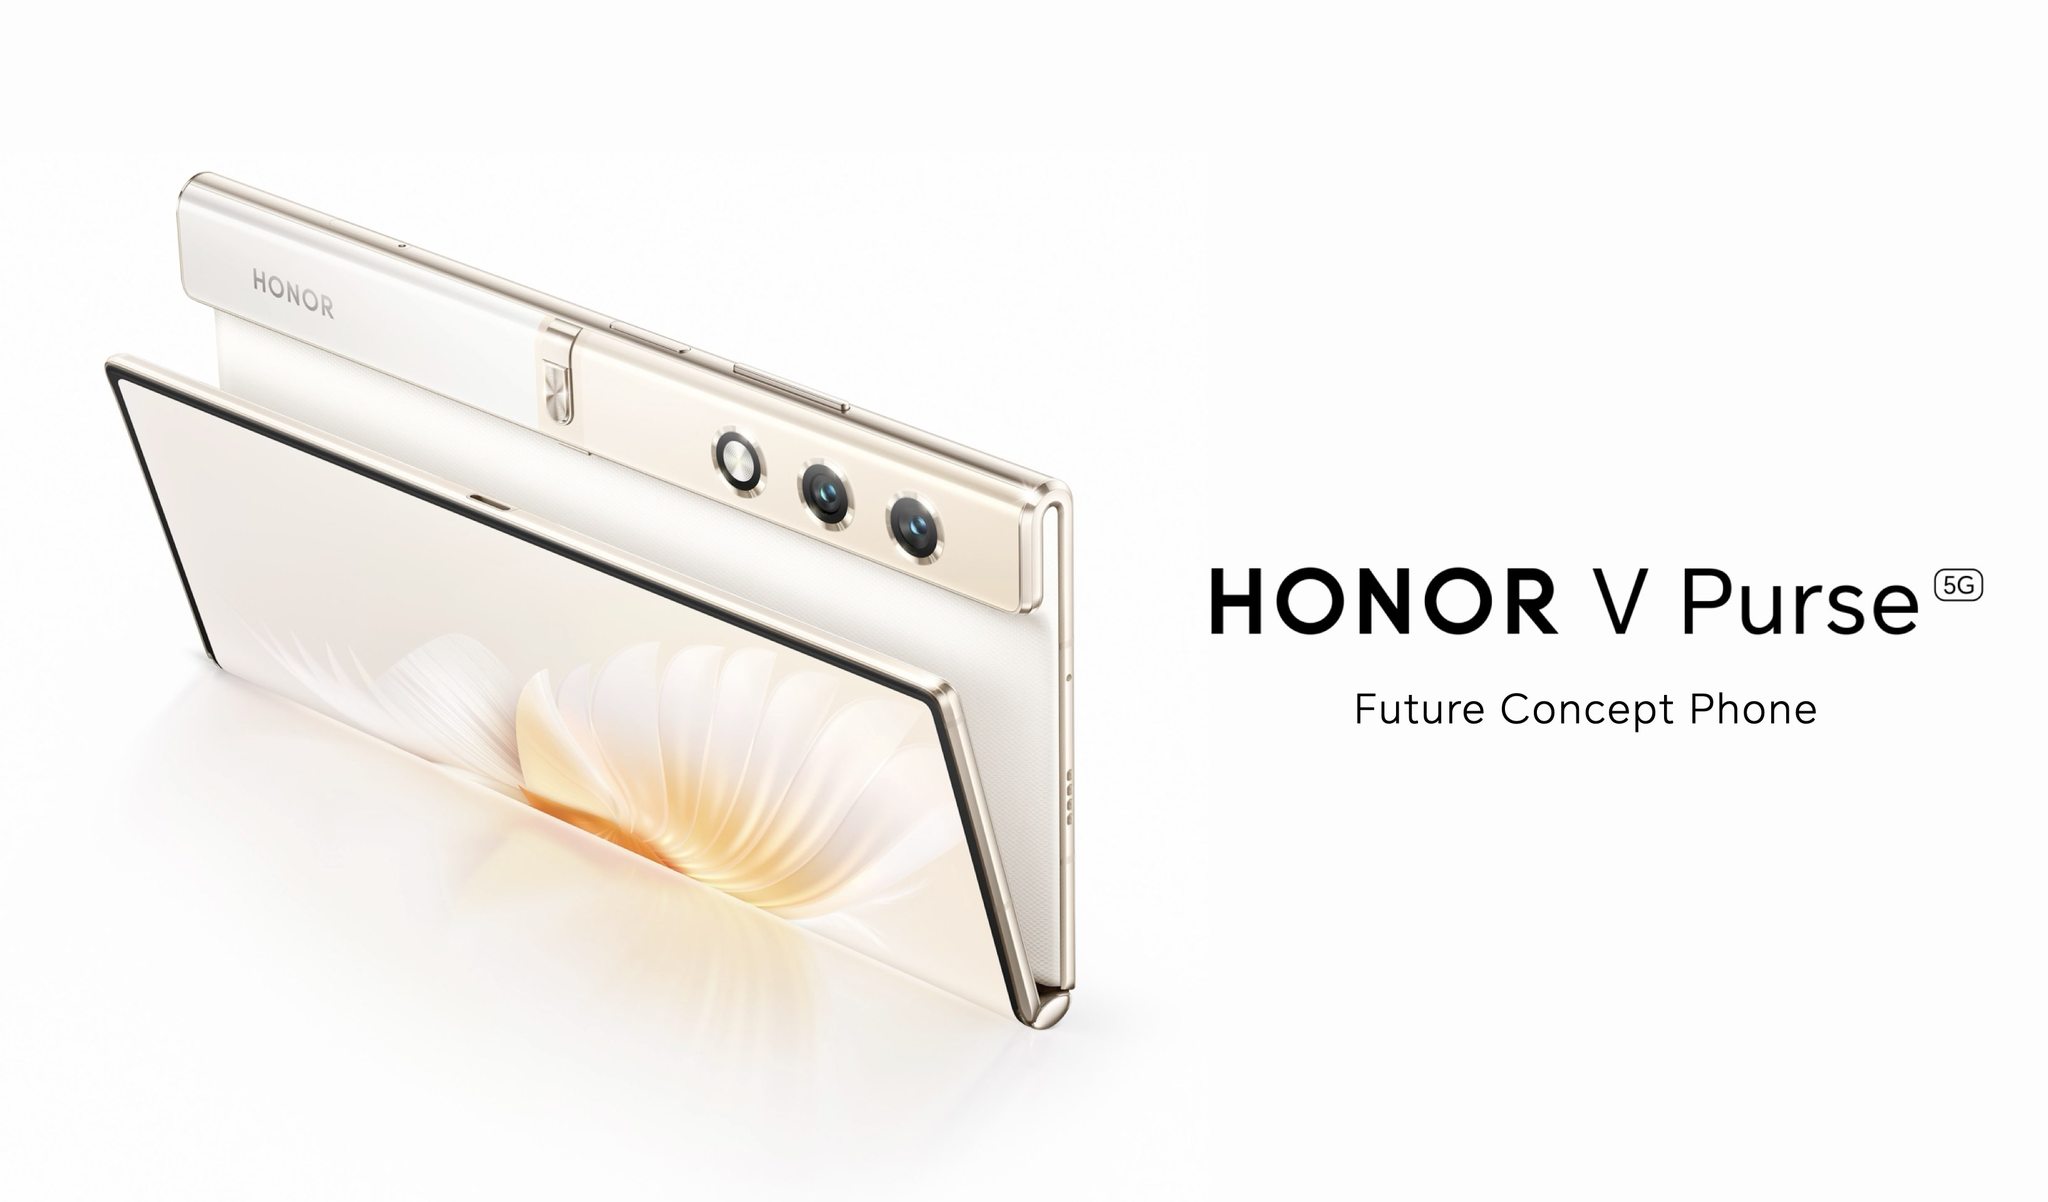 Honor Magic V2 foldable gets IFA headline alongside wearable phone